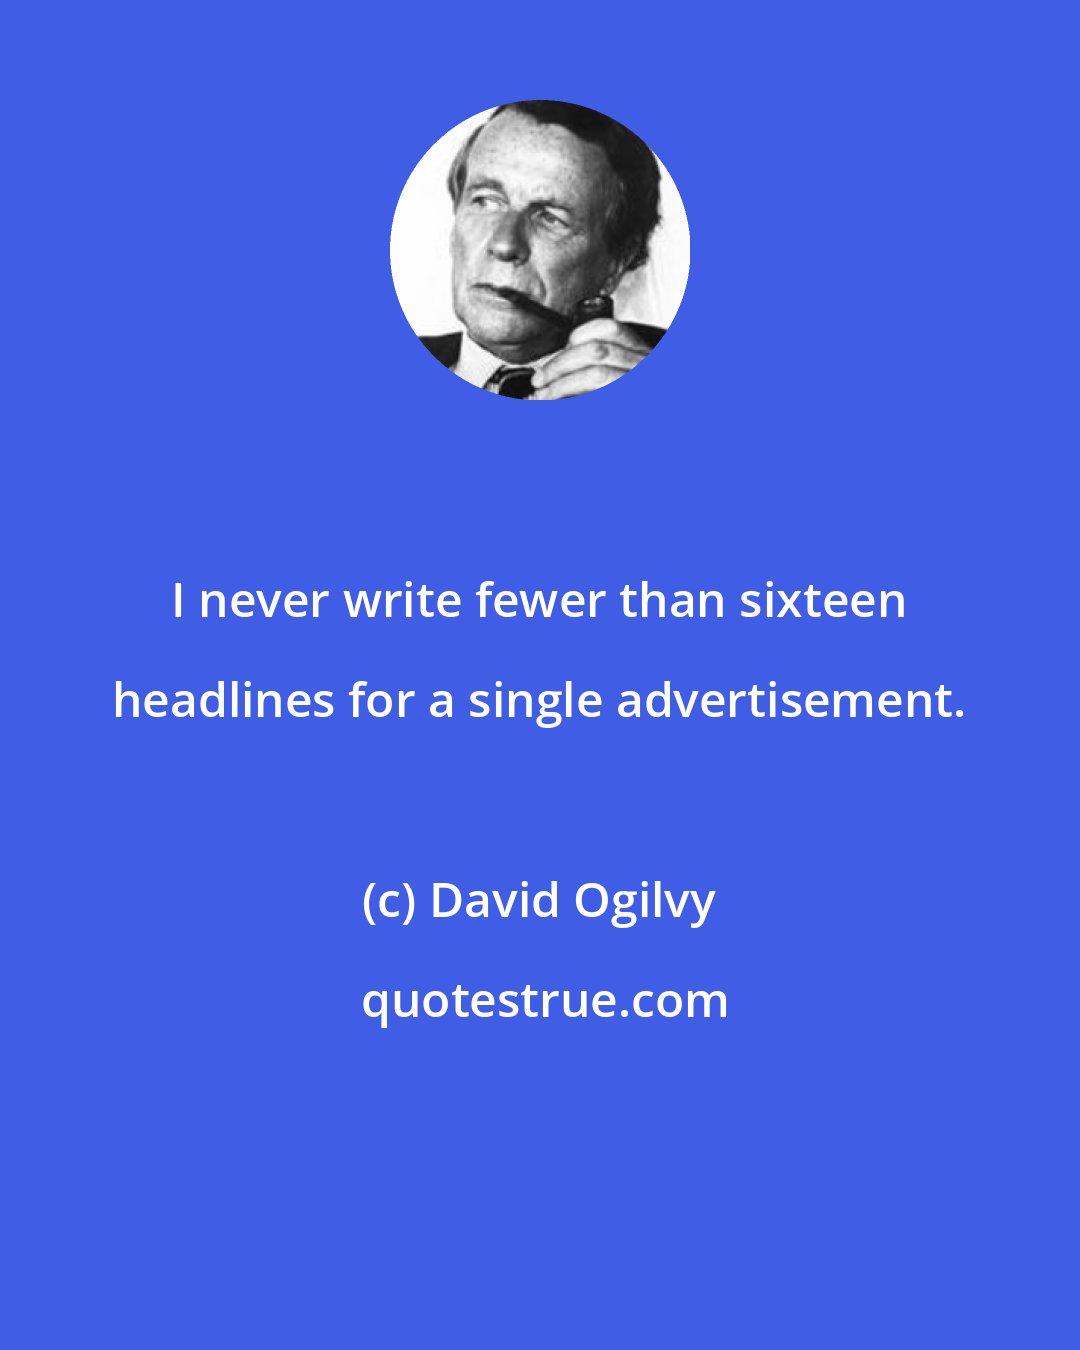 David Ogilvy: I never write fewer than sixteen headlines for a single advertisement.